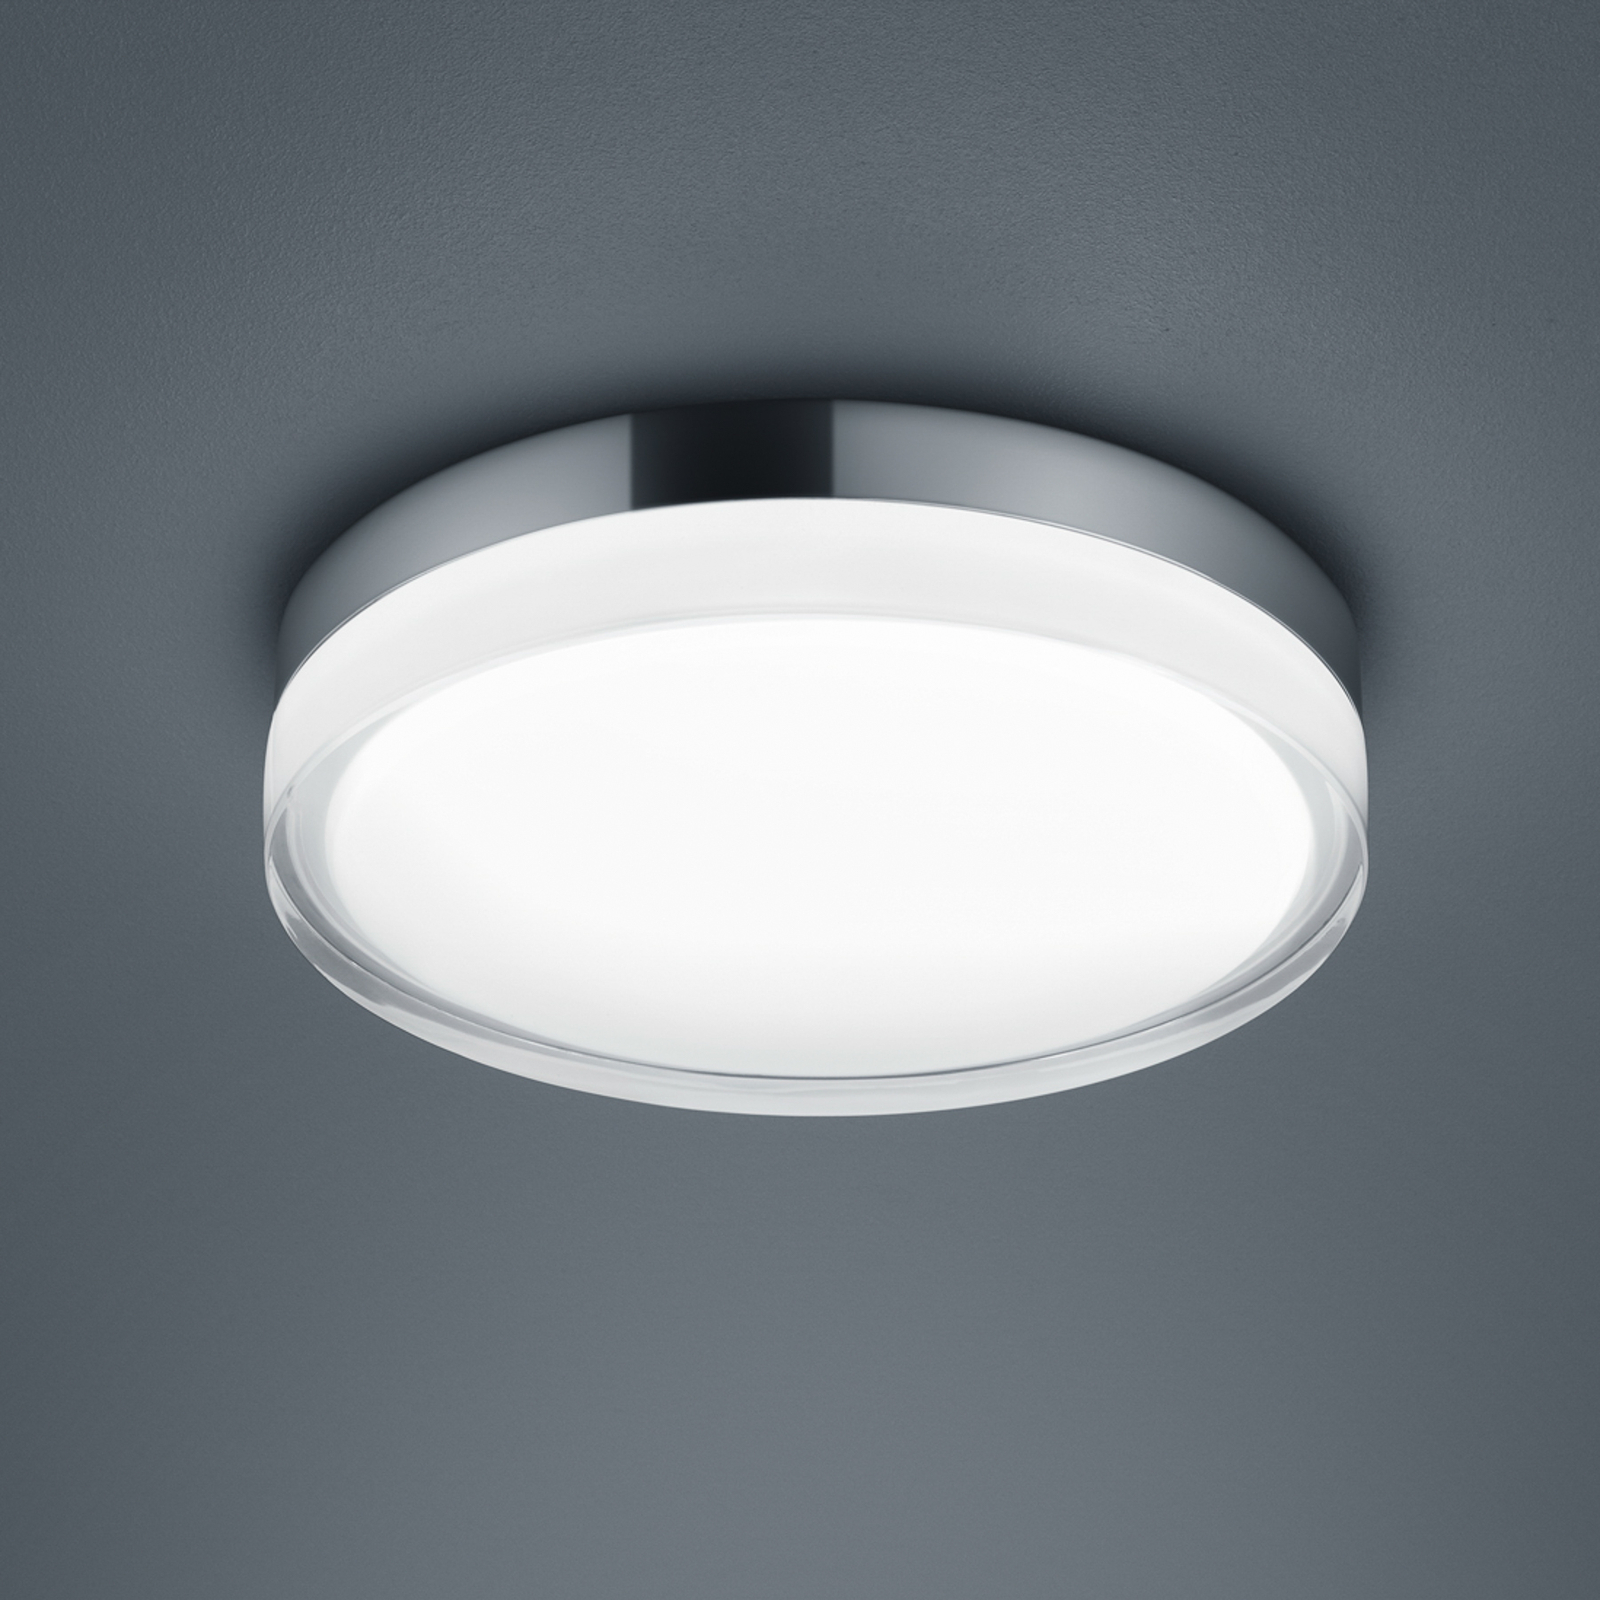 Helestra Tana lampa sufitowa LED, chrom, Ø 28 cm